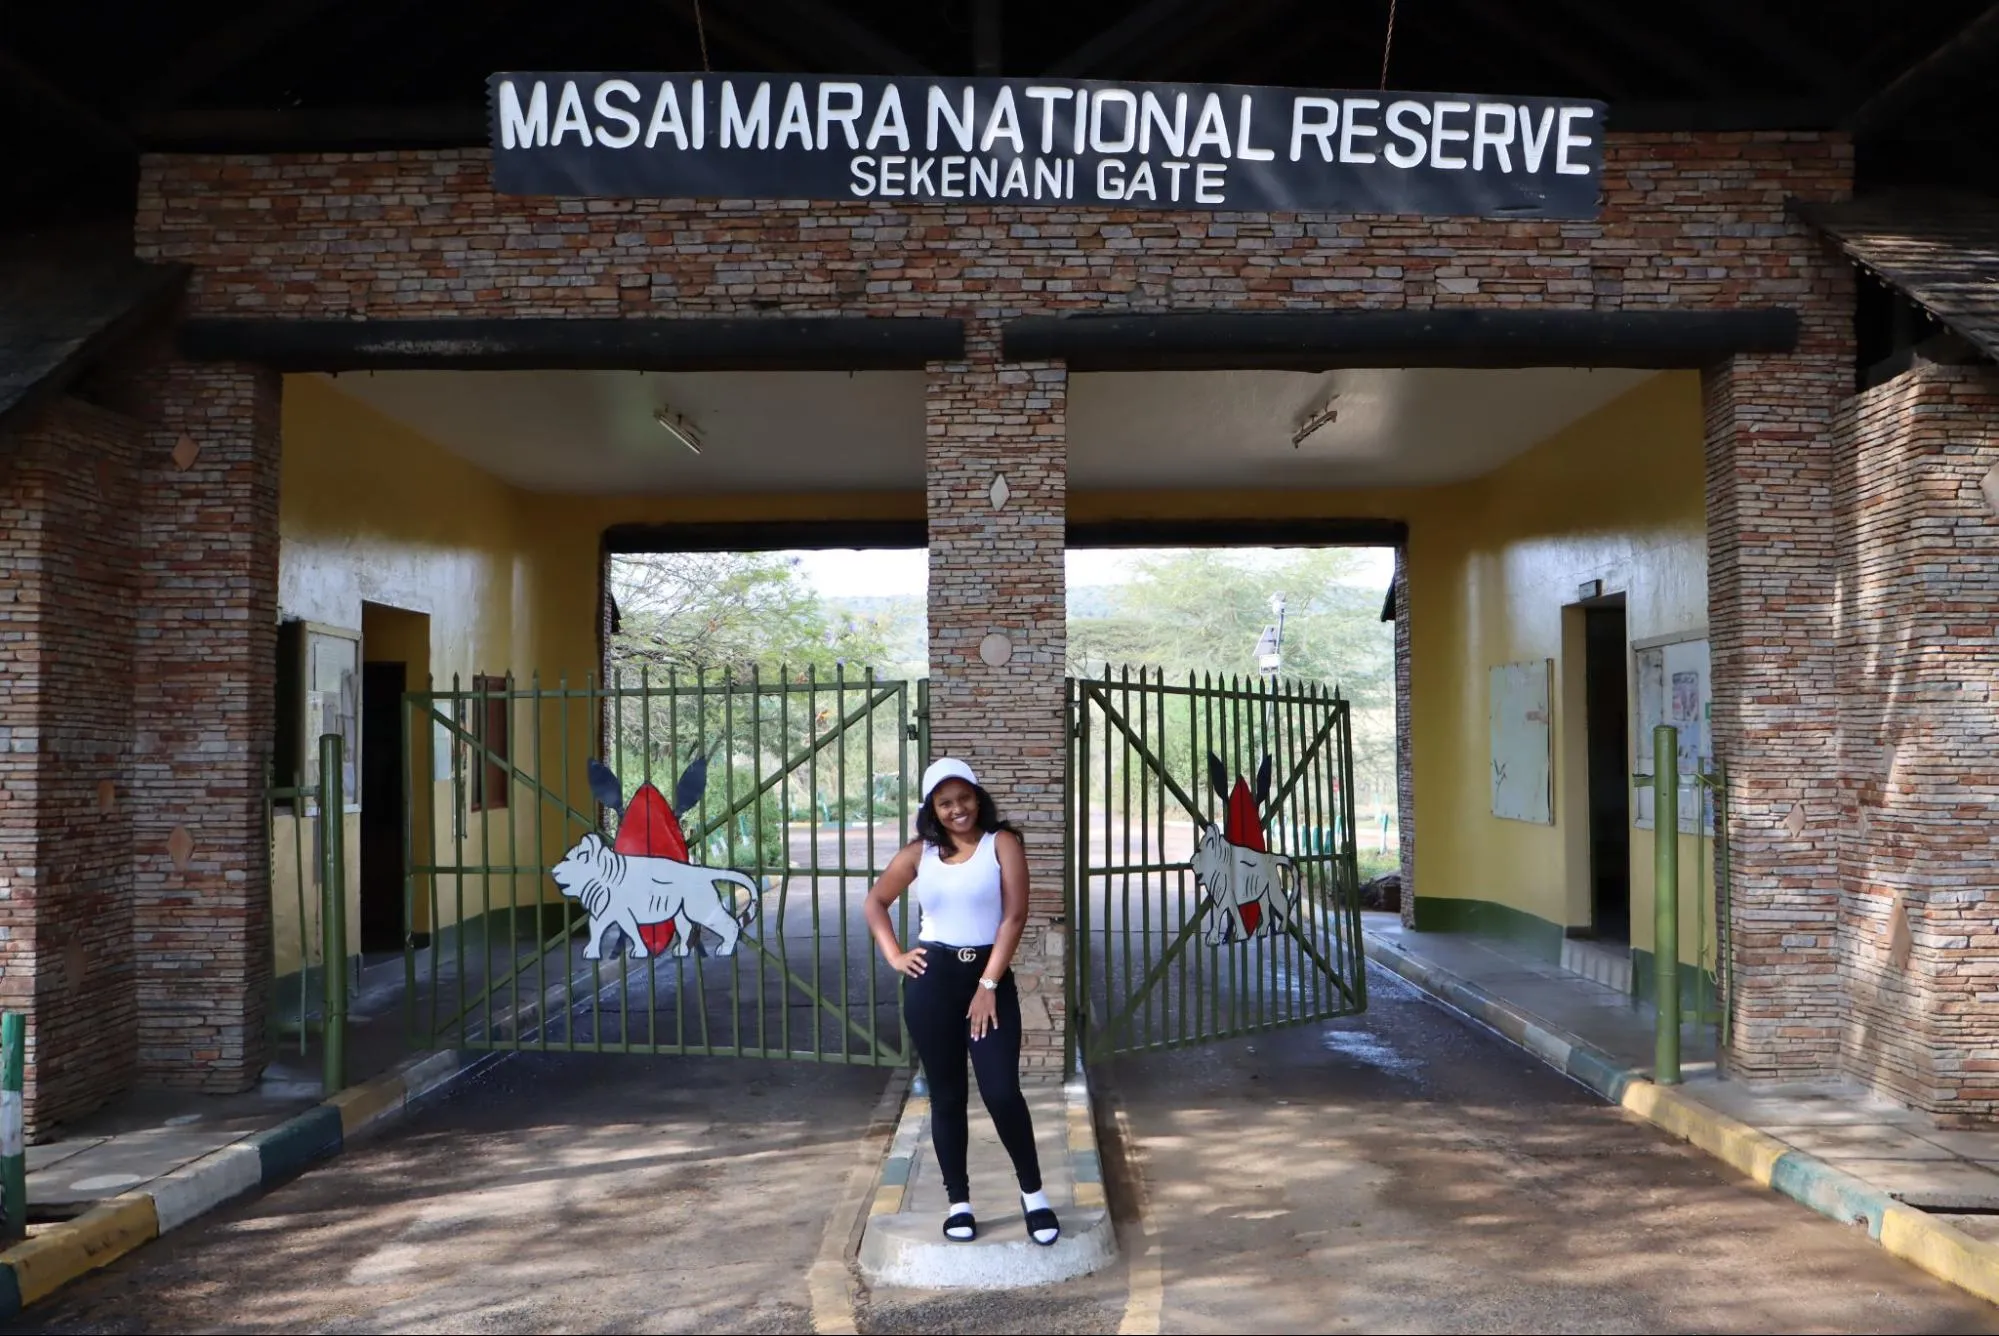 Kenya Tours - Our Consultant Gladys during Kenya safaris in Masai Mara National Reserve.